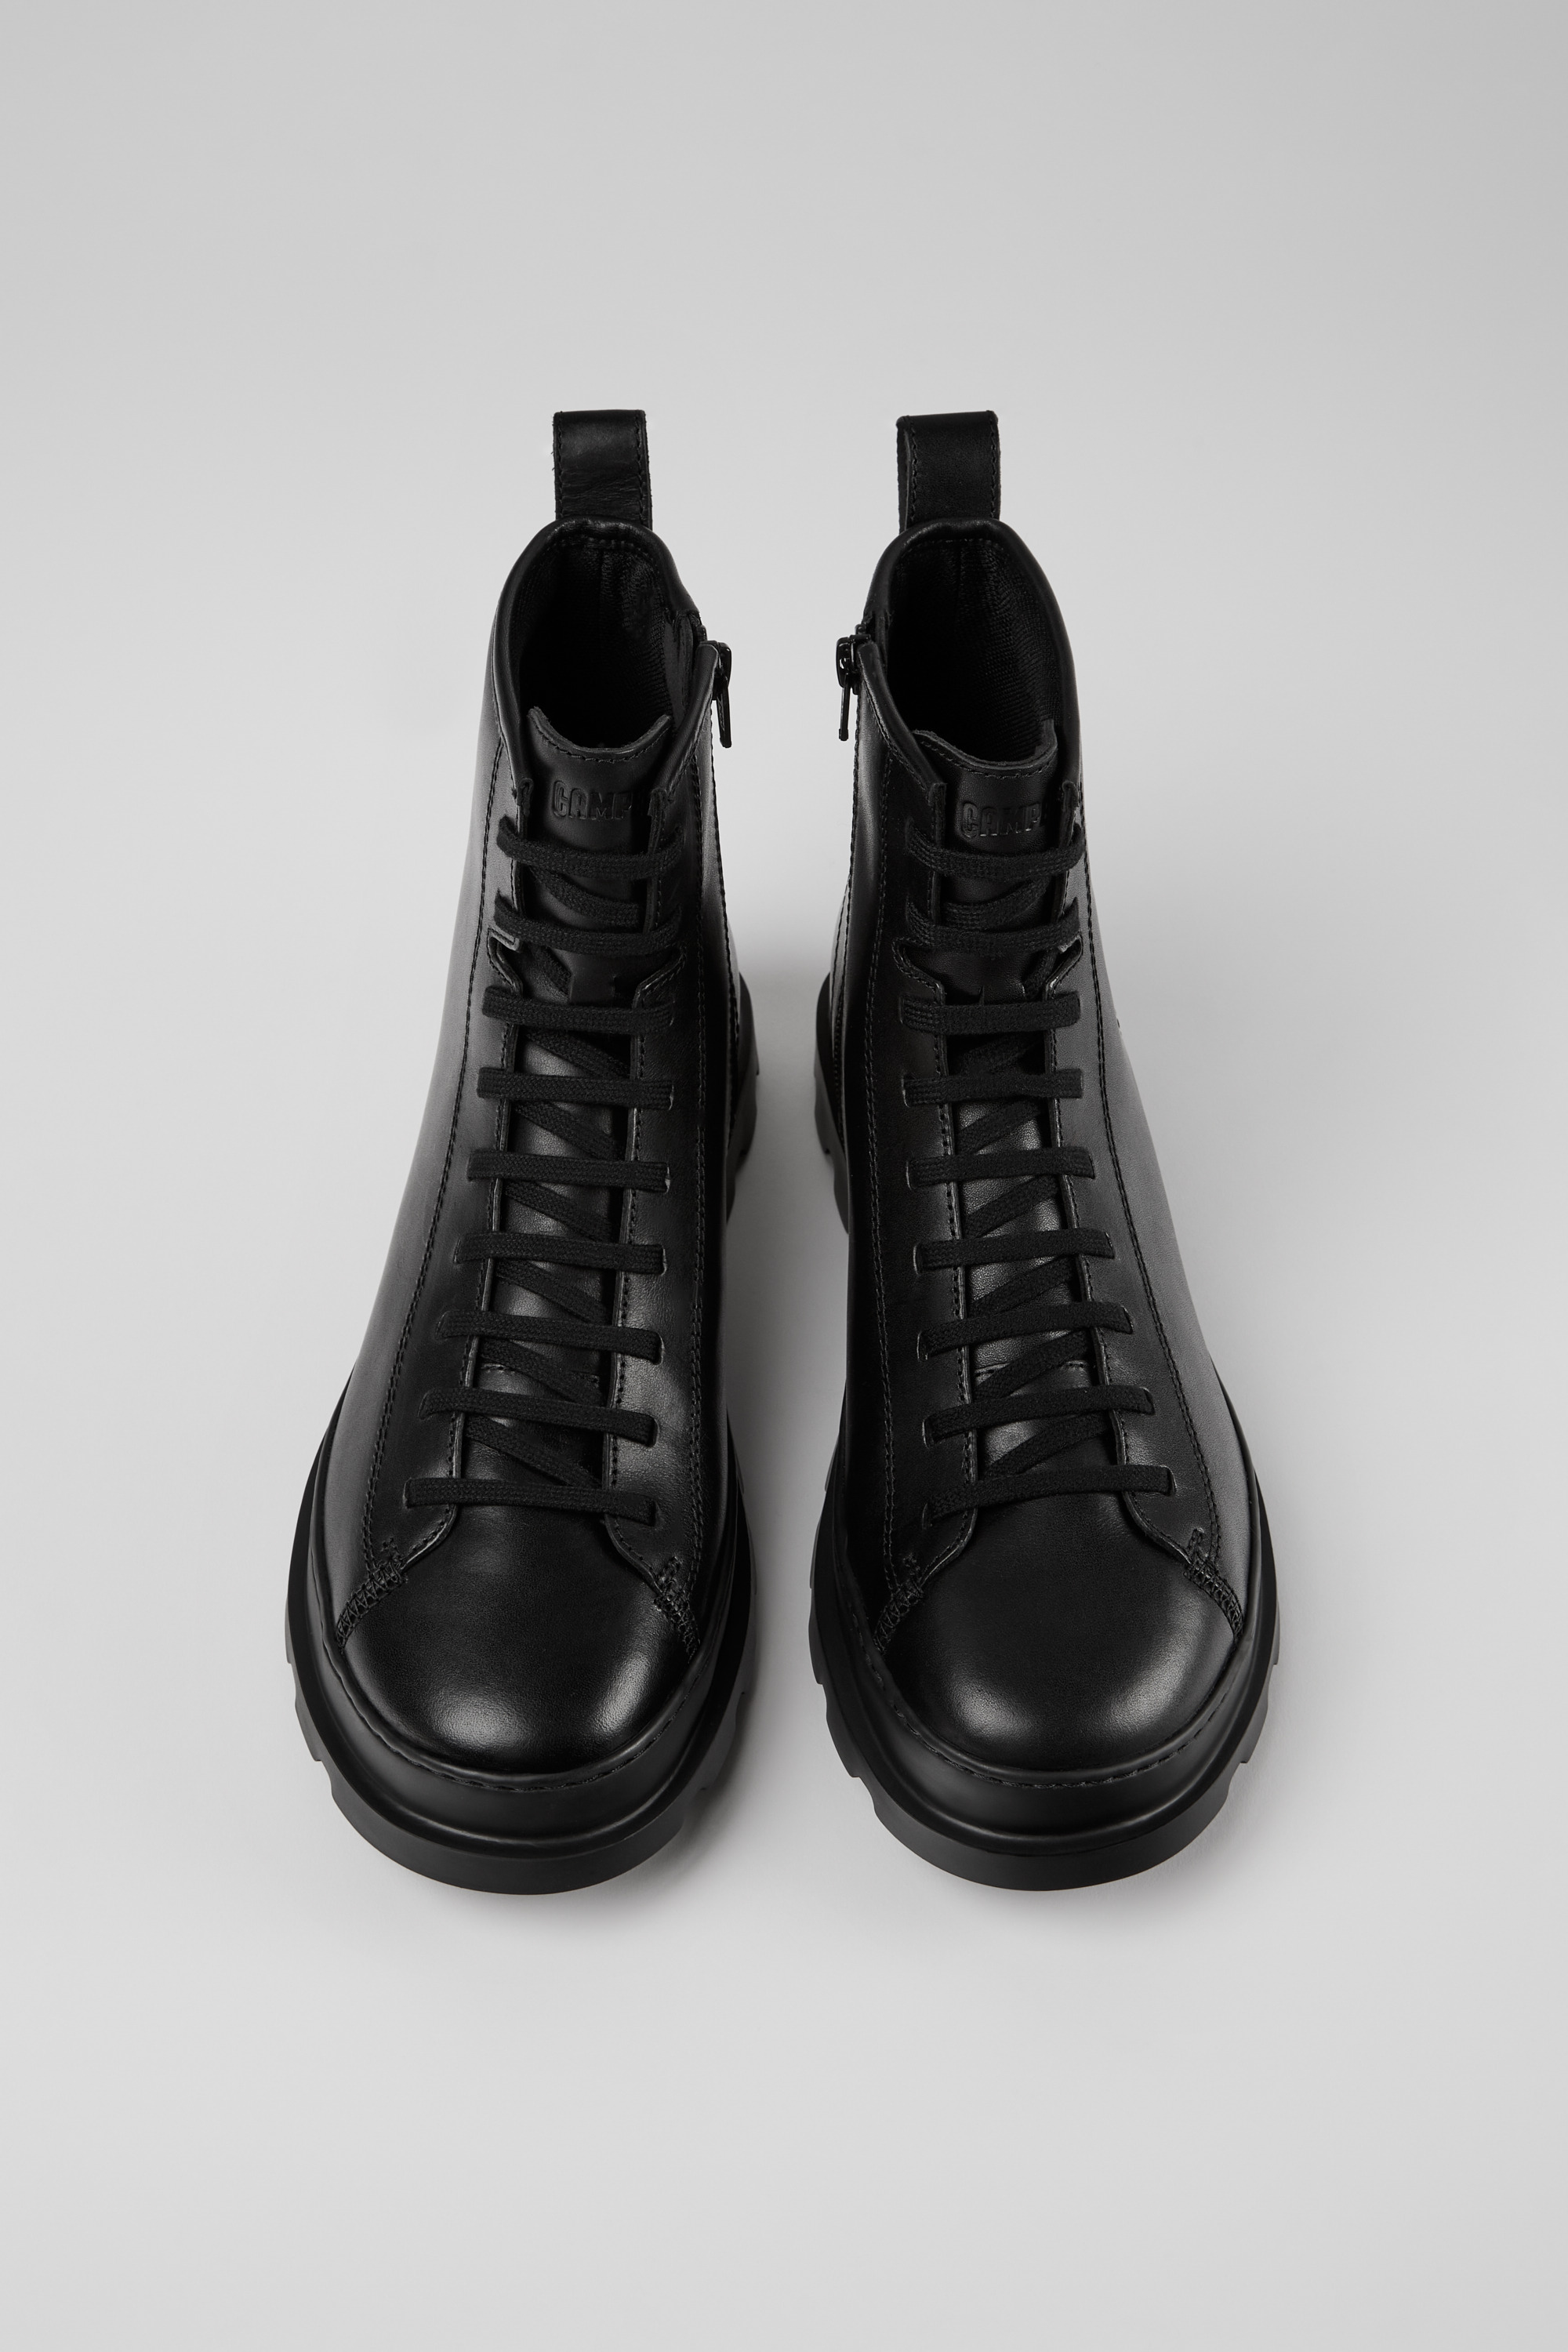 Brutus Black Formal Shoes for Men - Fall/Winter collection - Camper 